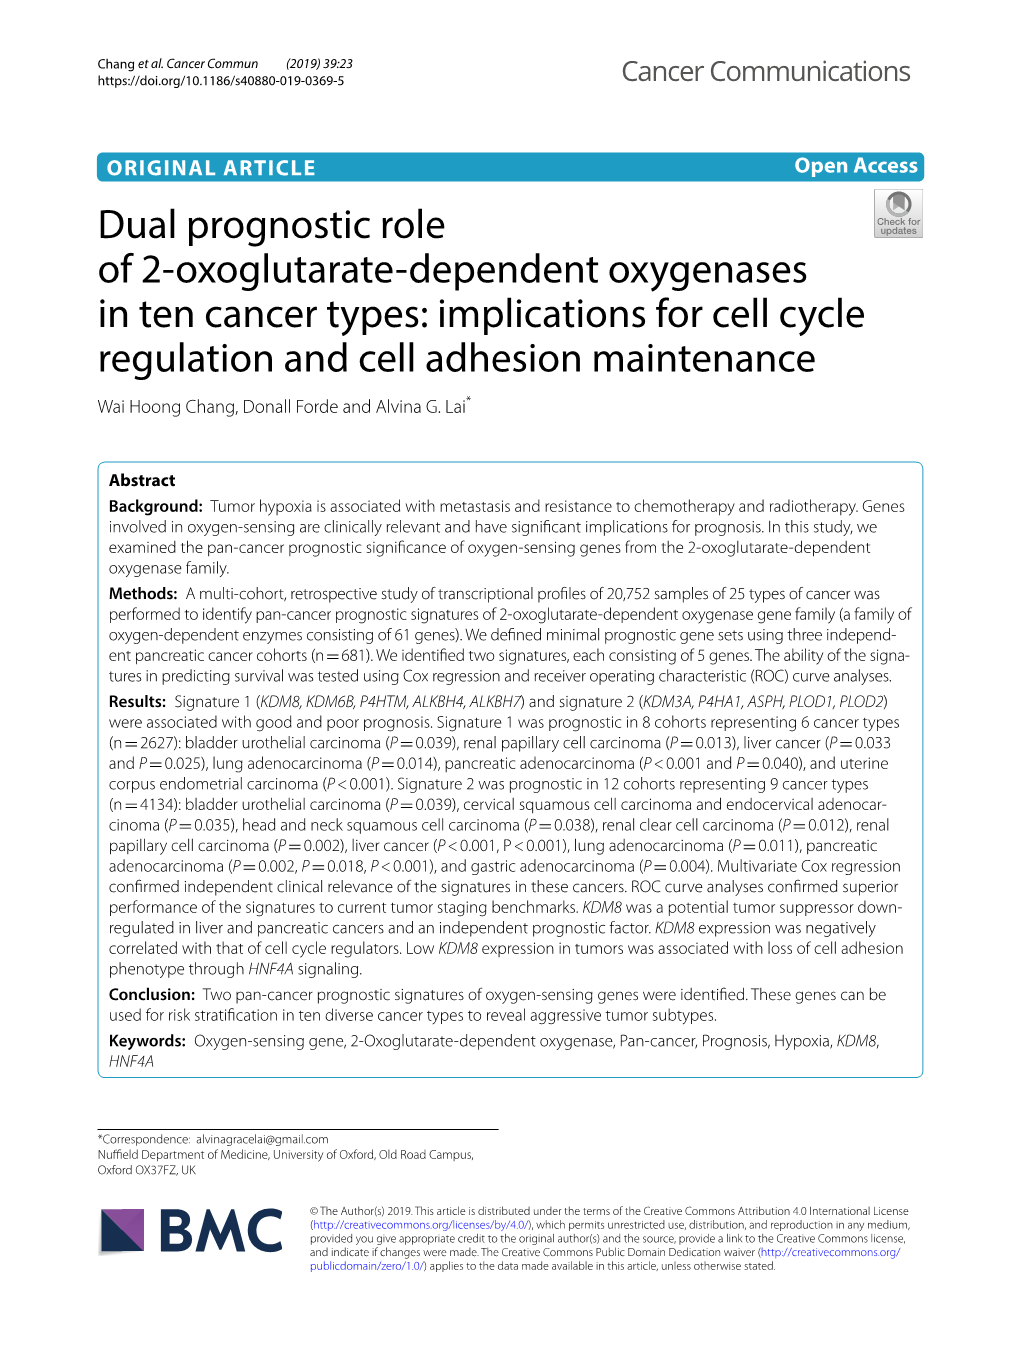 Dual Prognostic Role of 2-Oxoglutarate-Dependent